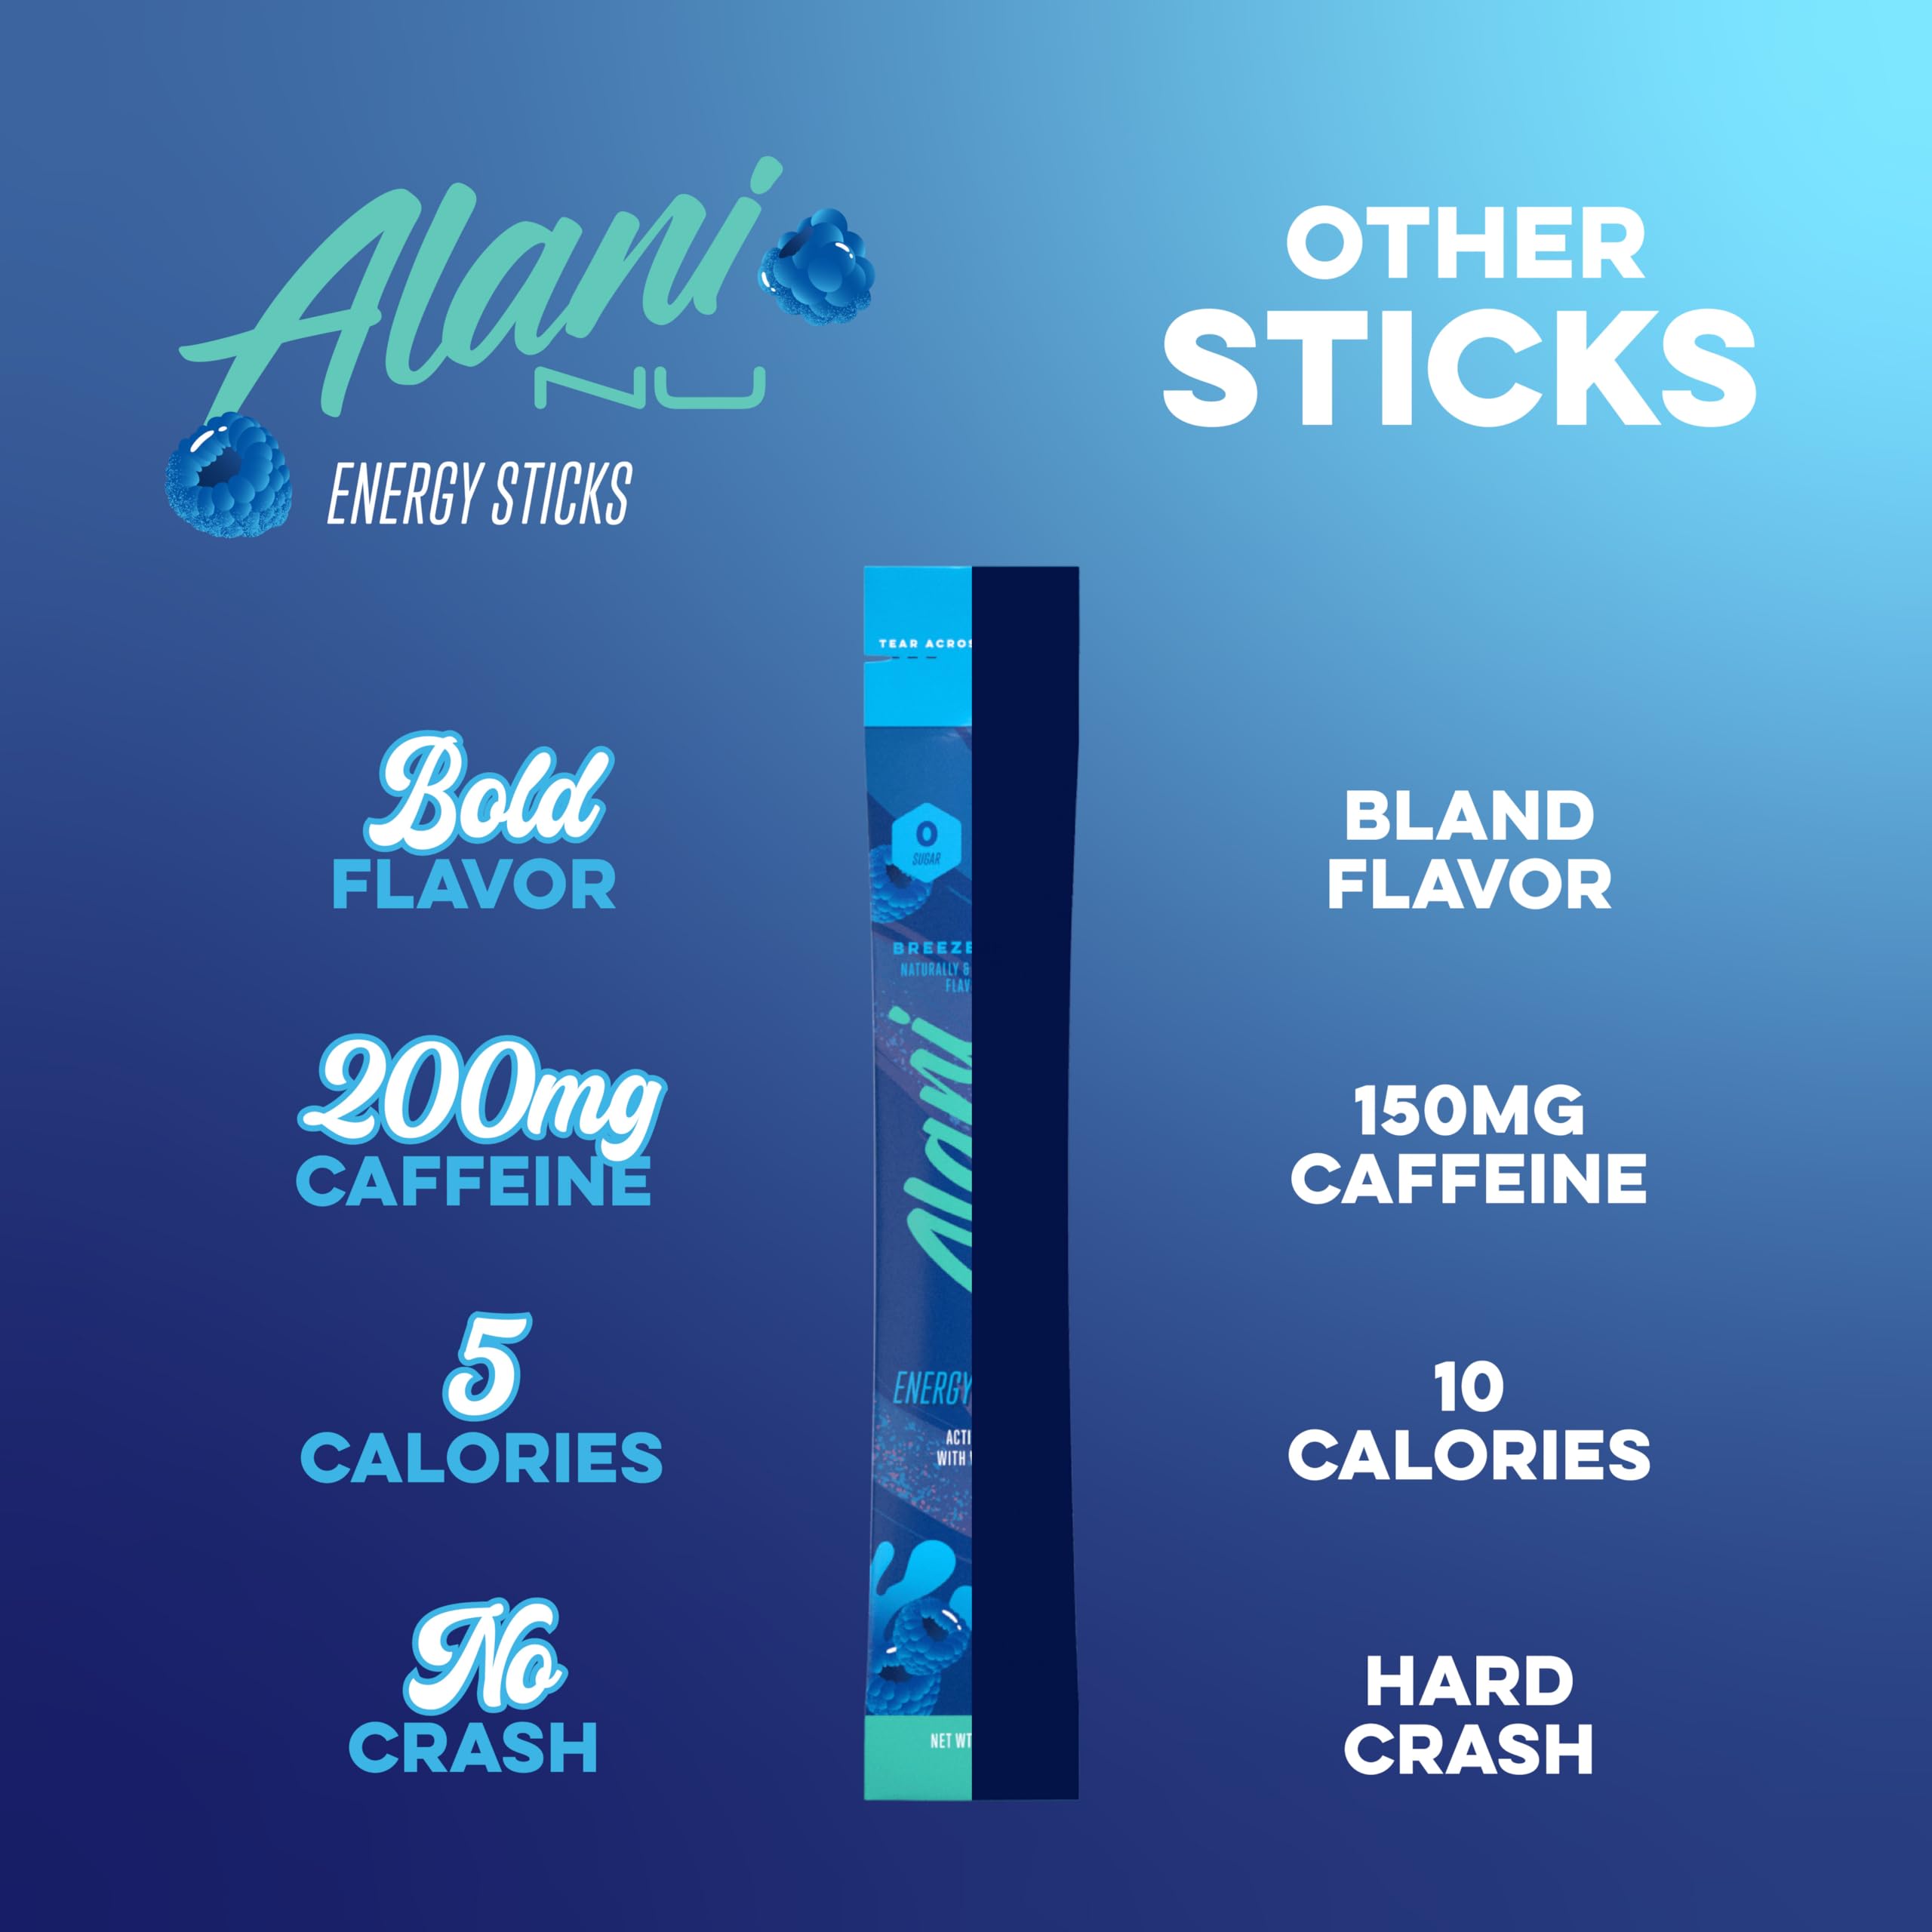 Alani Nu BREEZEBERRY Energy Sticks | Energy Drink Powder | 200mg Caffeine | Pre Workout Performance with Antioxidants | On-The-Go Drink Mix | Biotin, B Vitamins | Zero Sugar | 5 Calories | 10 Pack